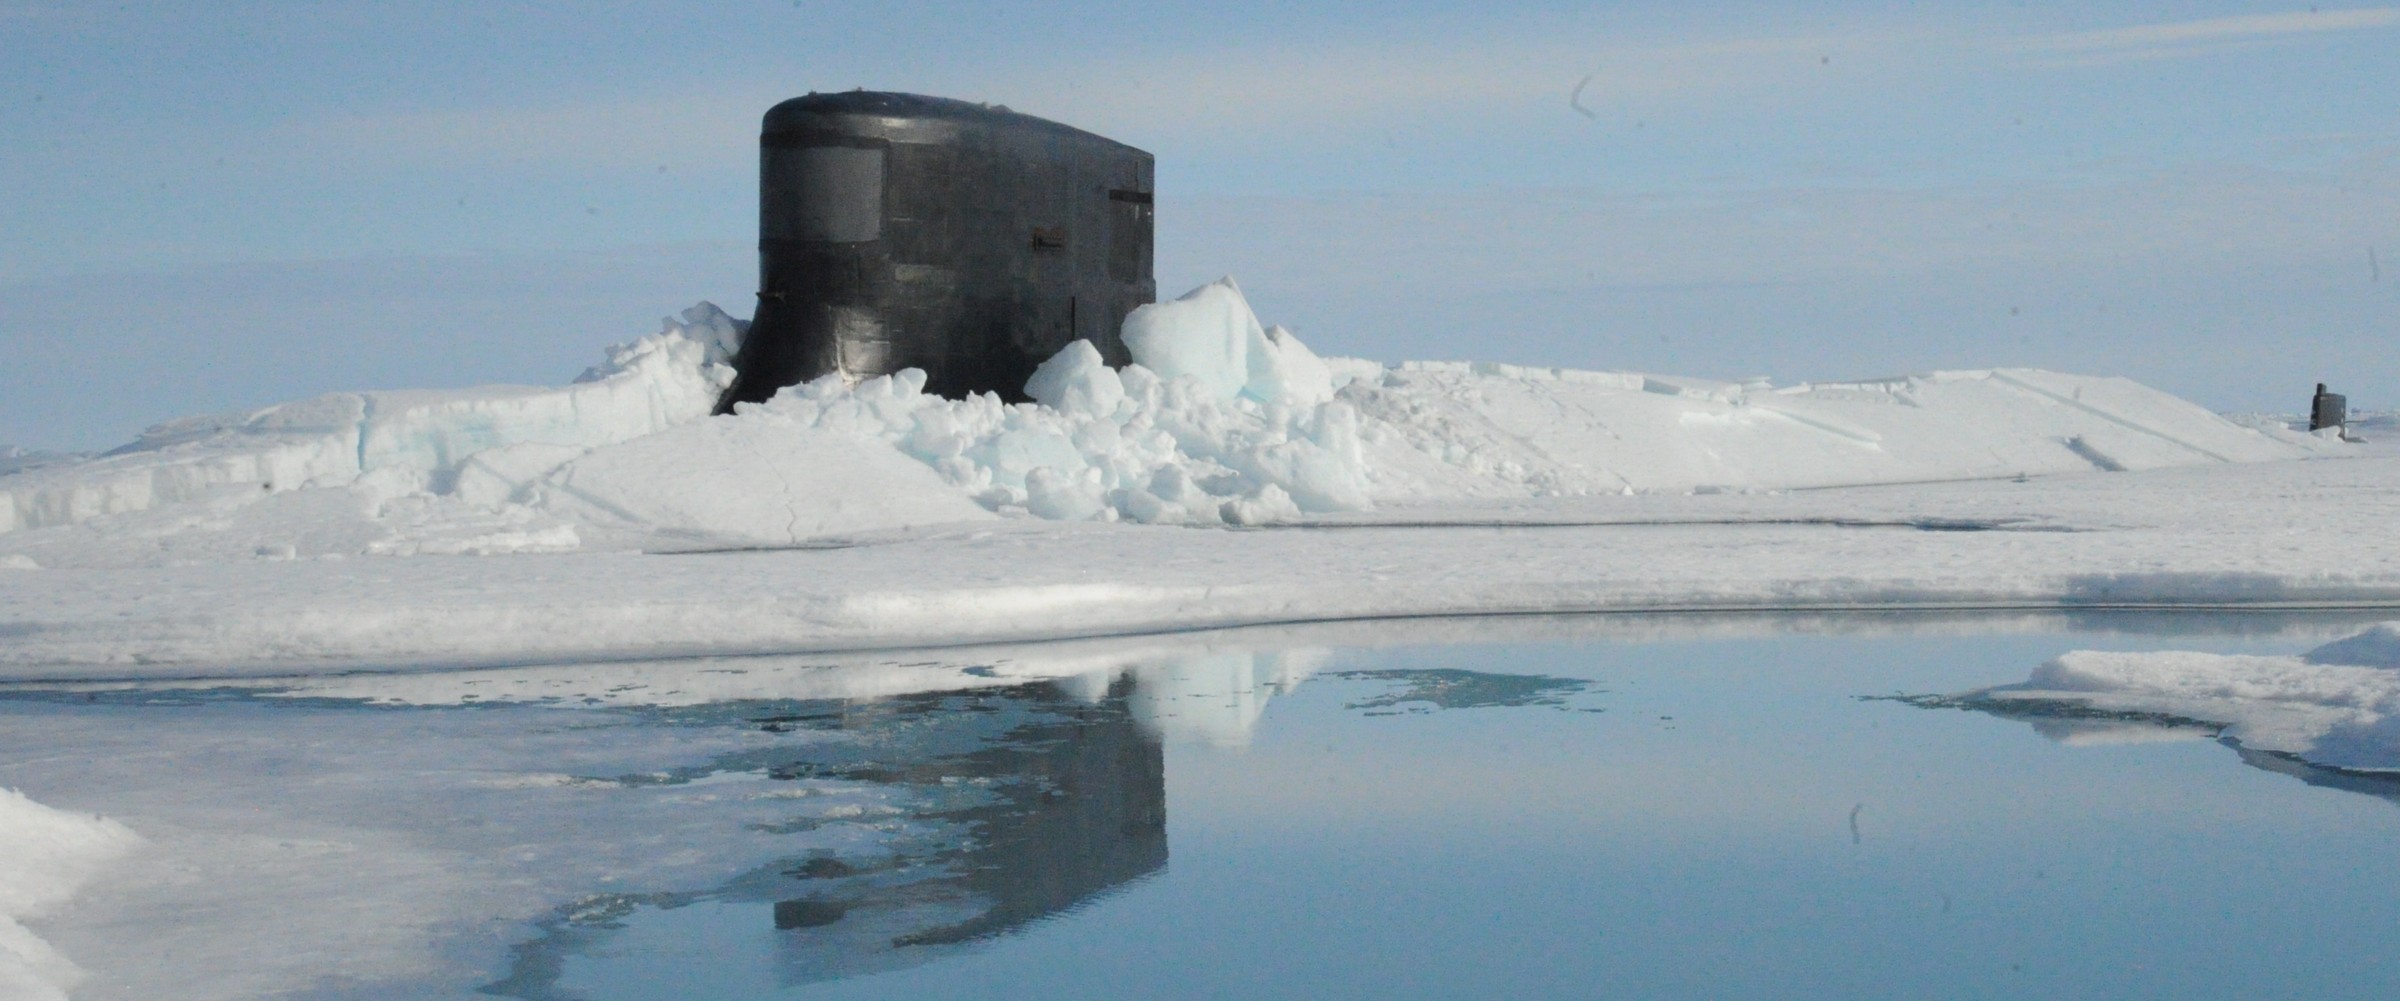 ssn-21 uss seawolf attack submarine us navy arctic ocean icex 16